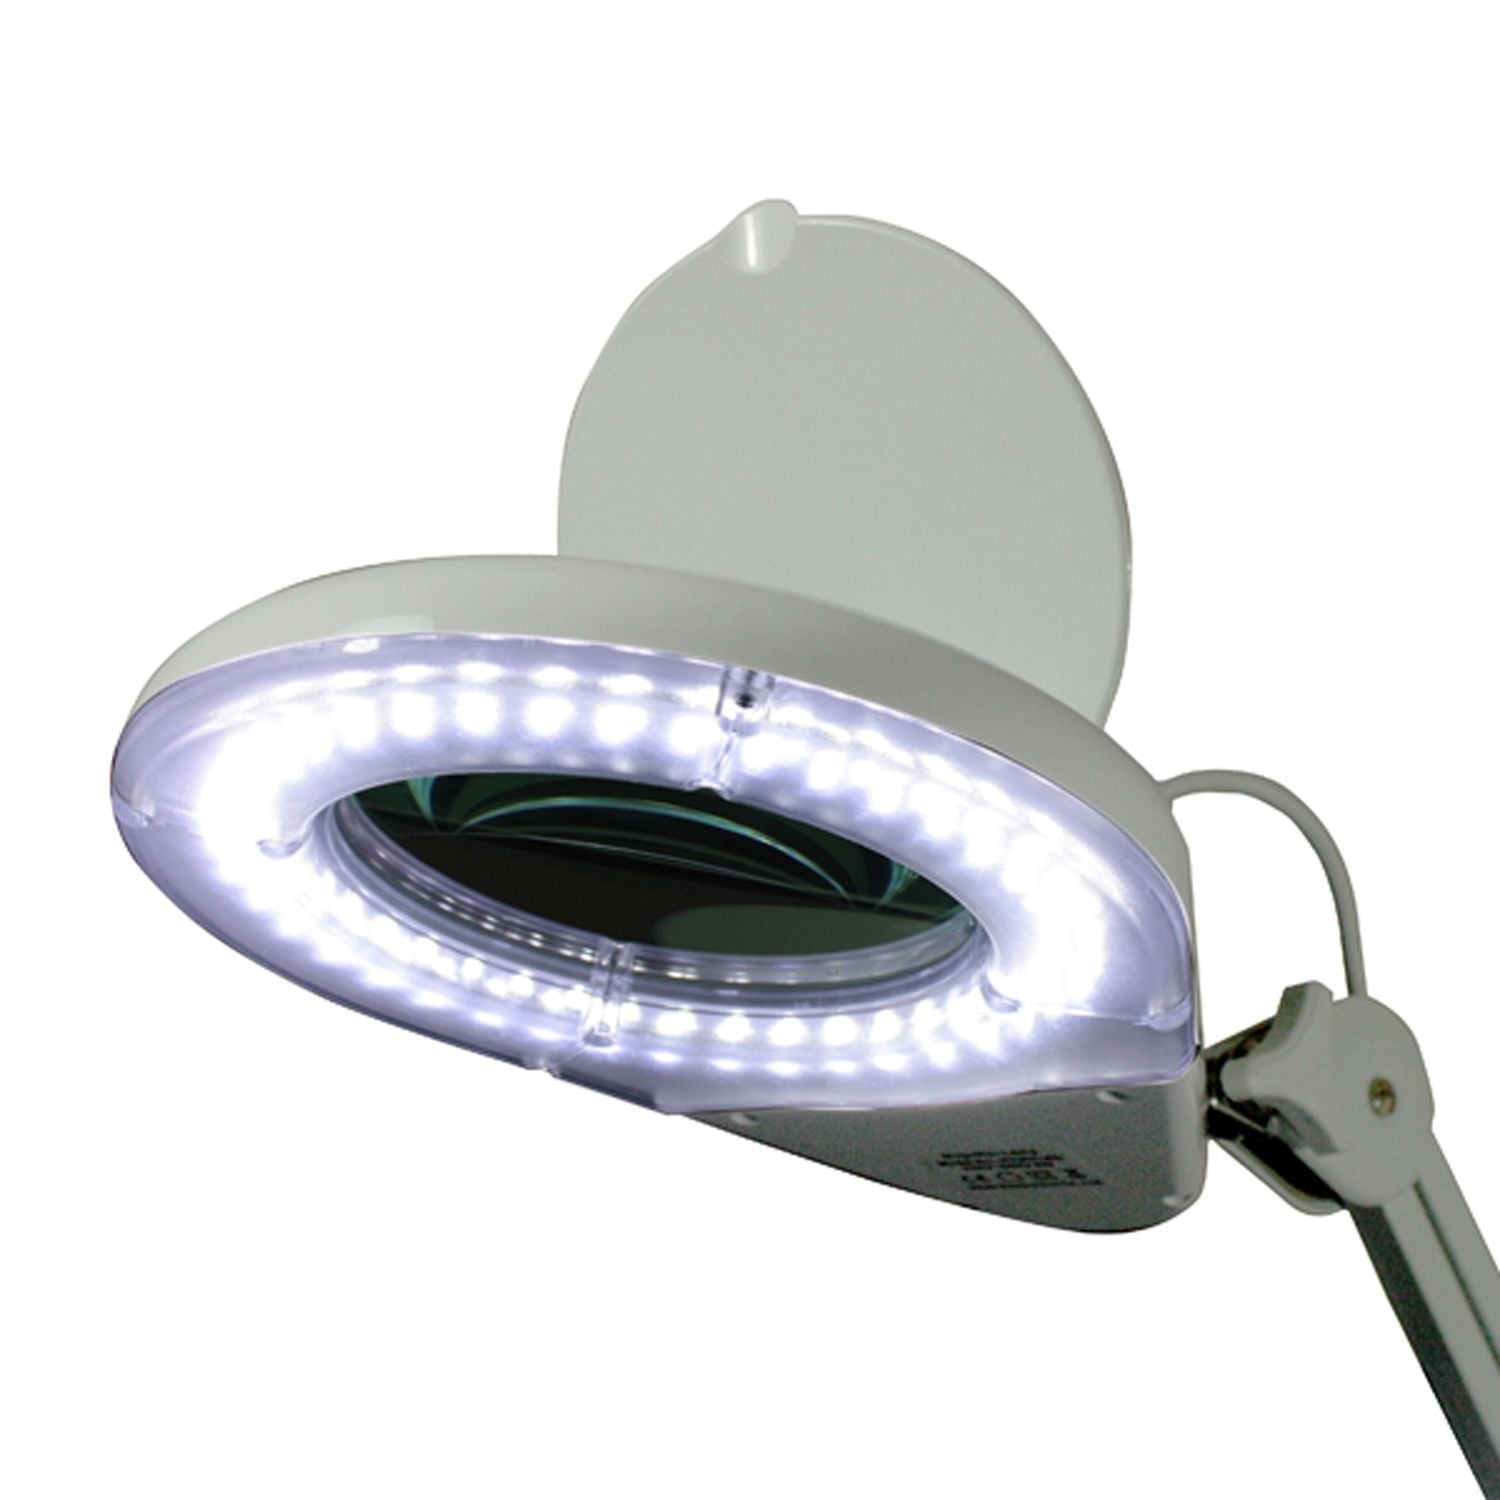 Daray Circular LED Magnifying Light | 12 Diopter, Desk Mounted